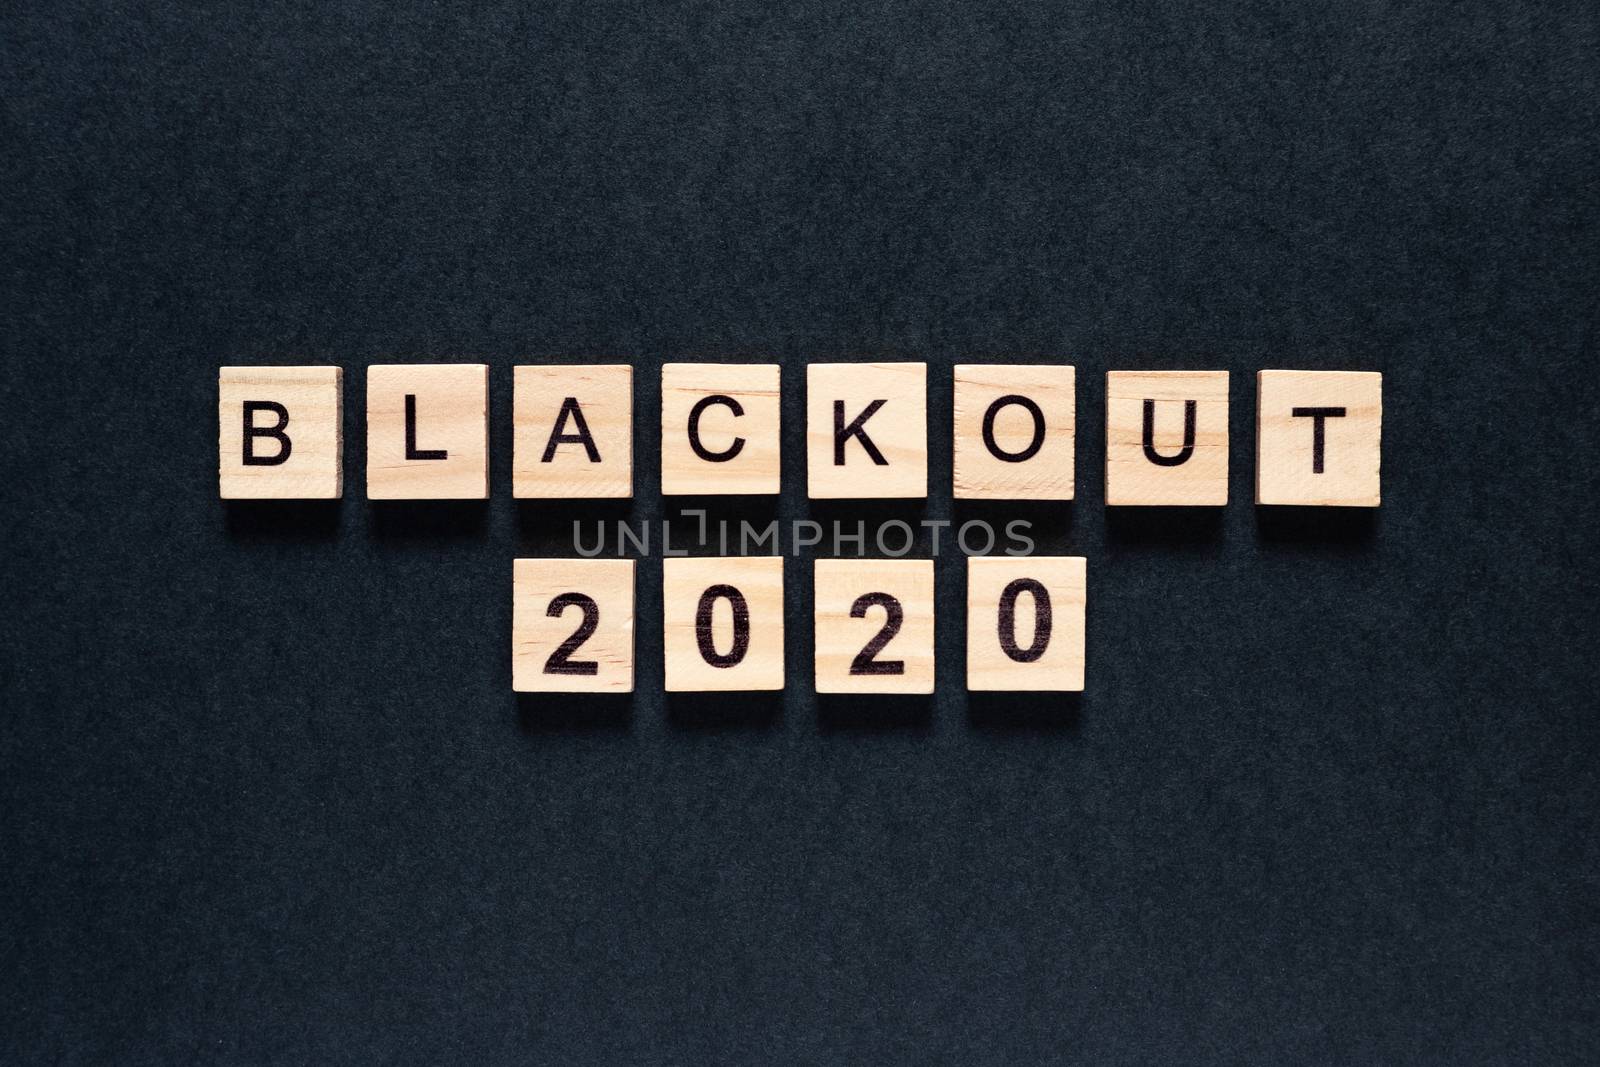 Blackout inscription on a black background. Black lives matter, blackout tuesday 2020 concept. blackout in USA. protests. unrest